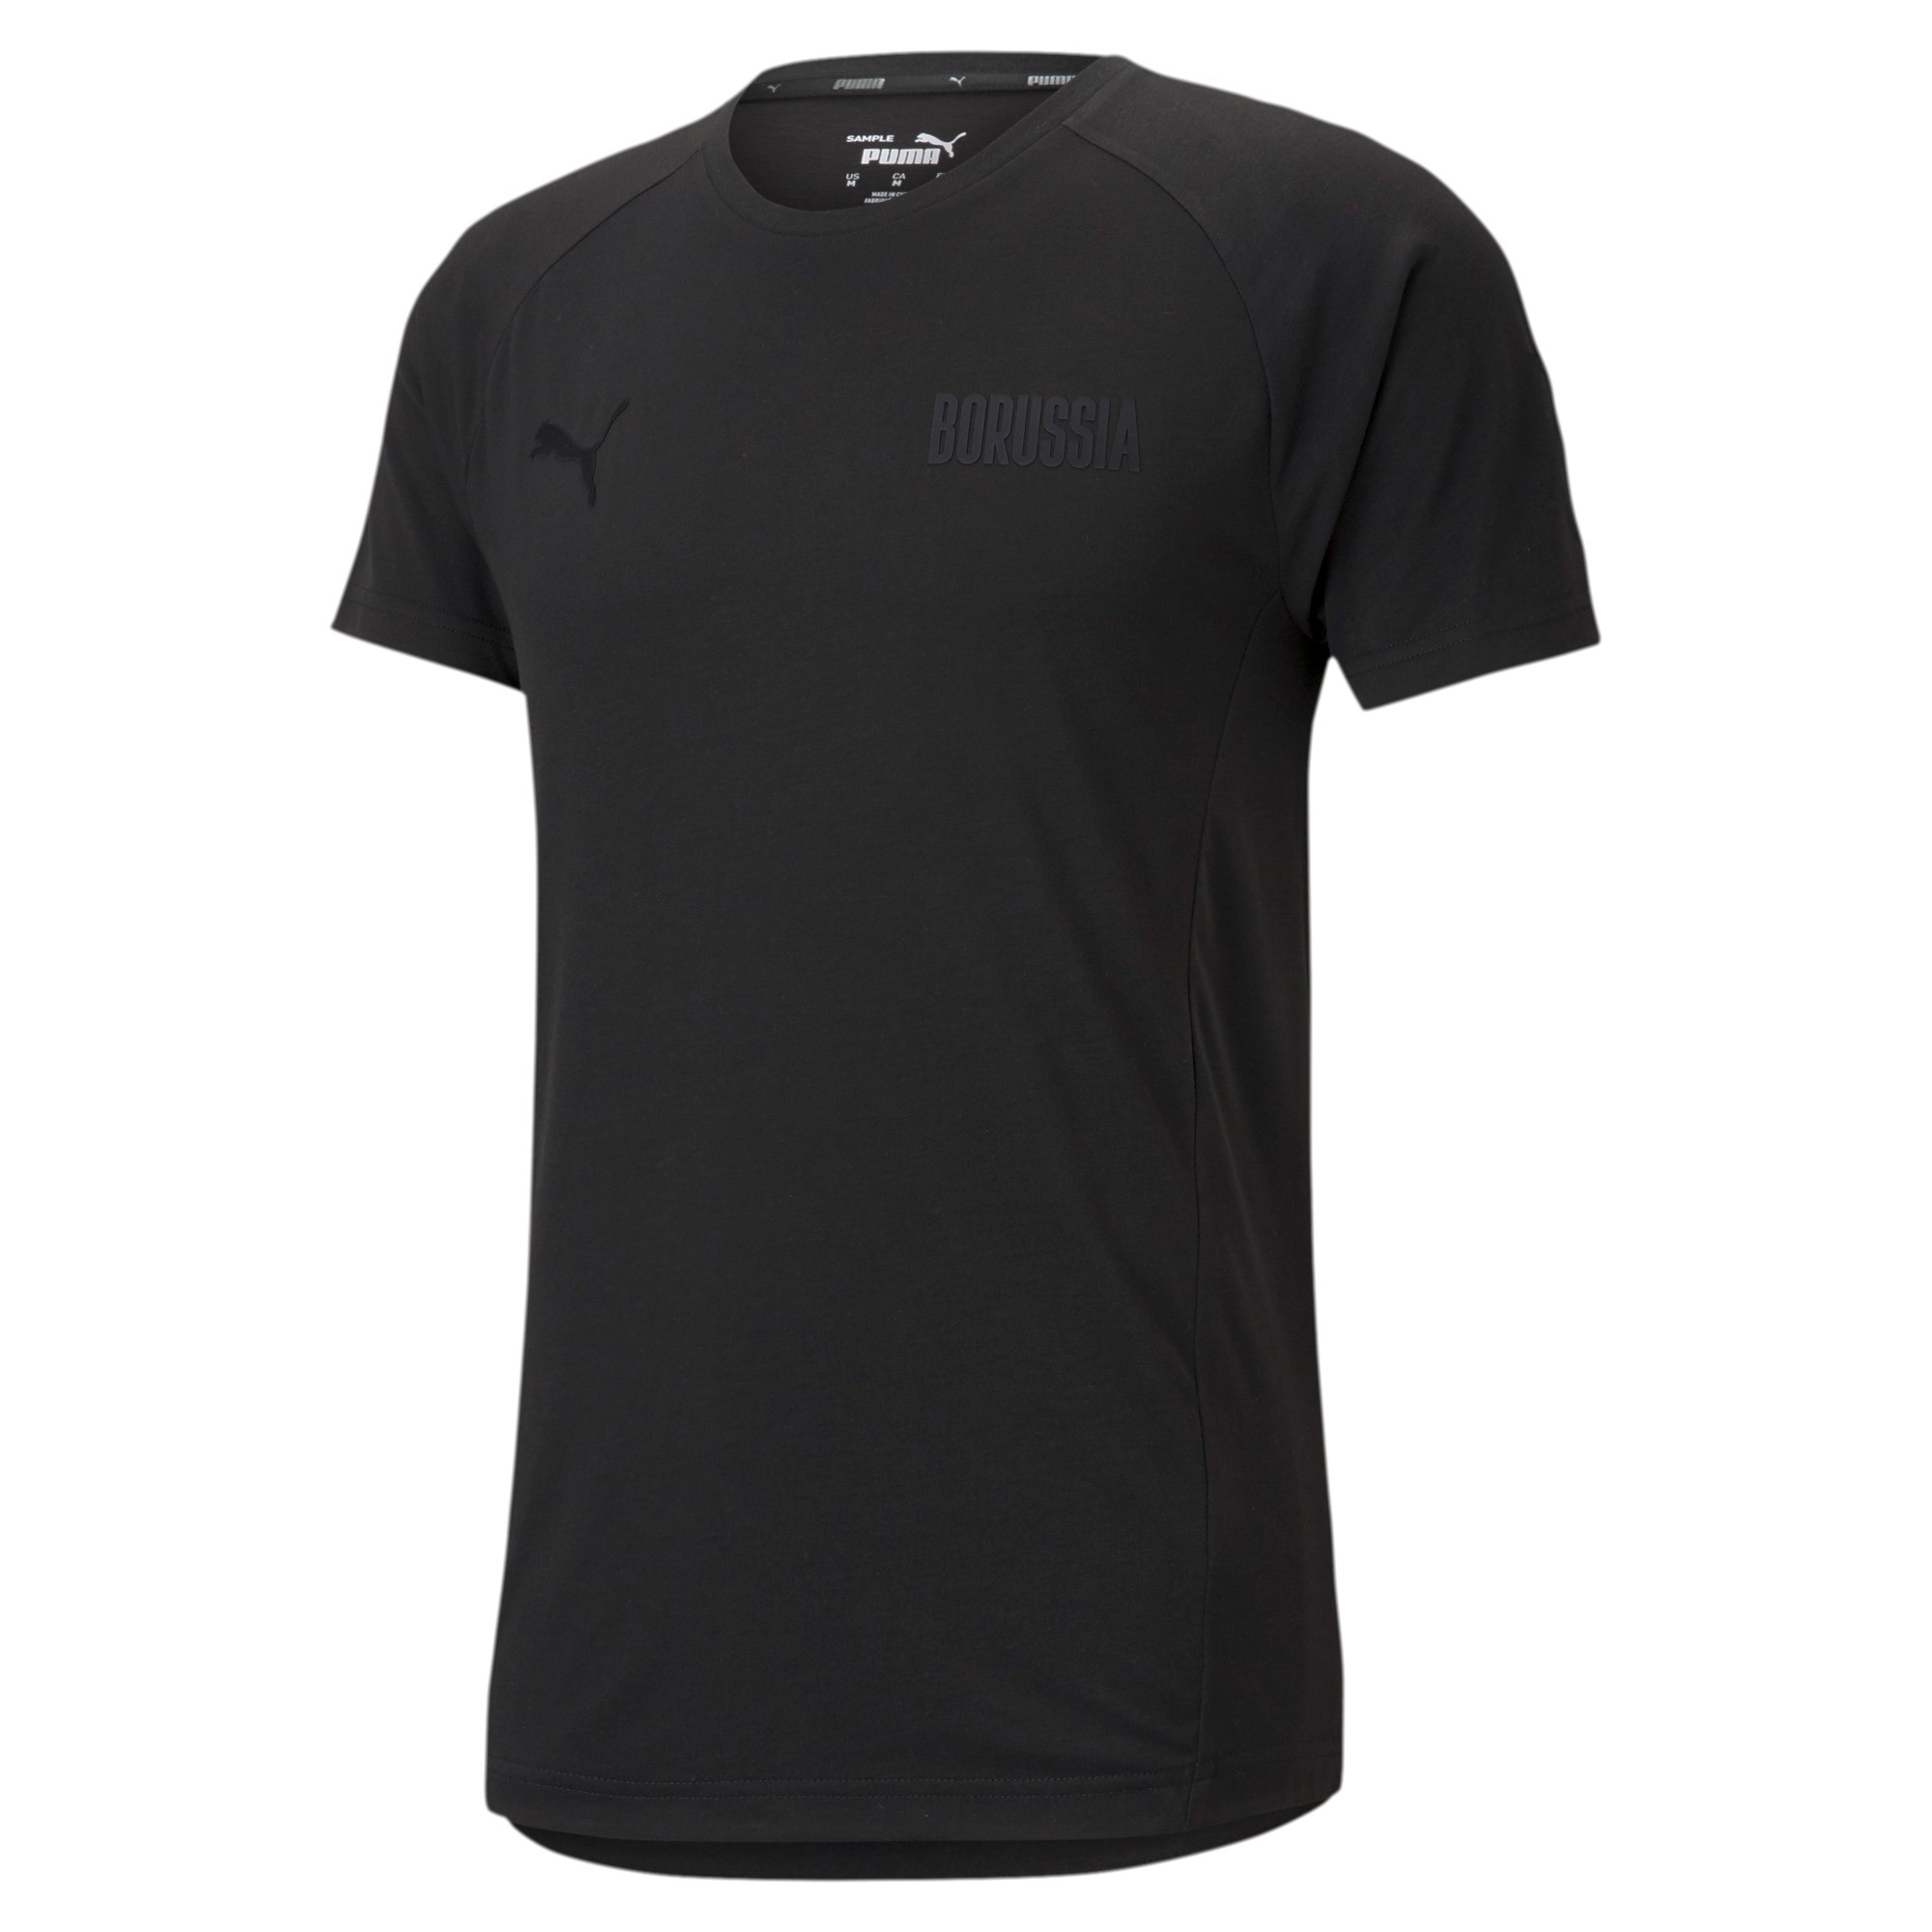 Borussia Moenchengladbach Puma T-Shirt "Evostripe" - black